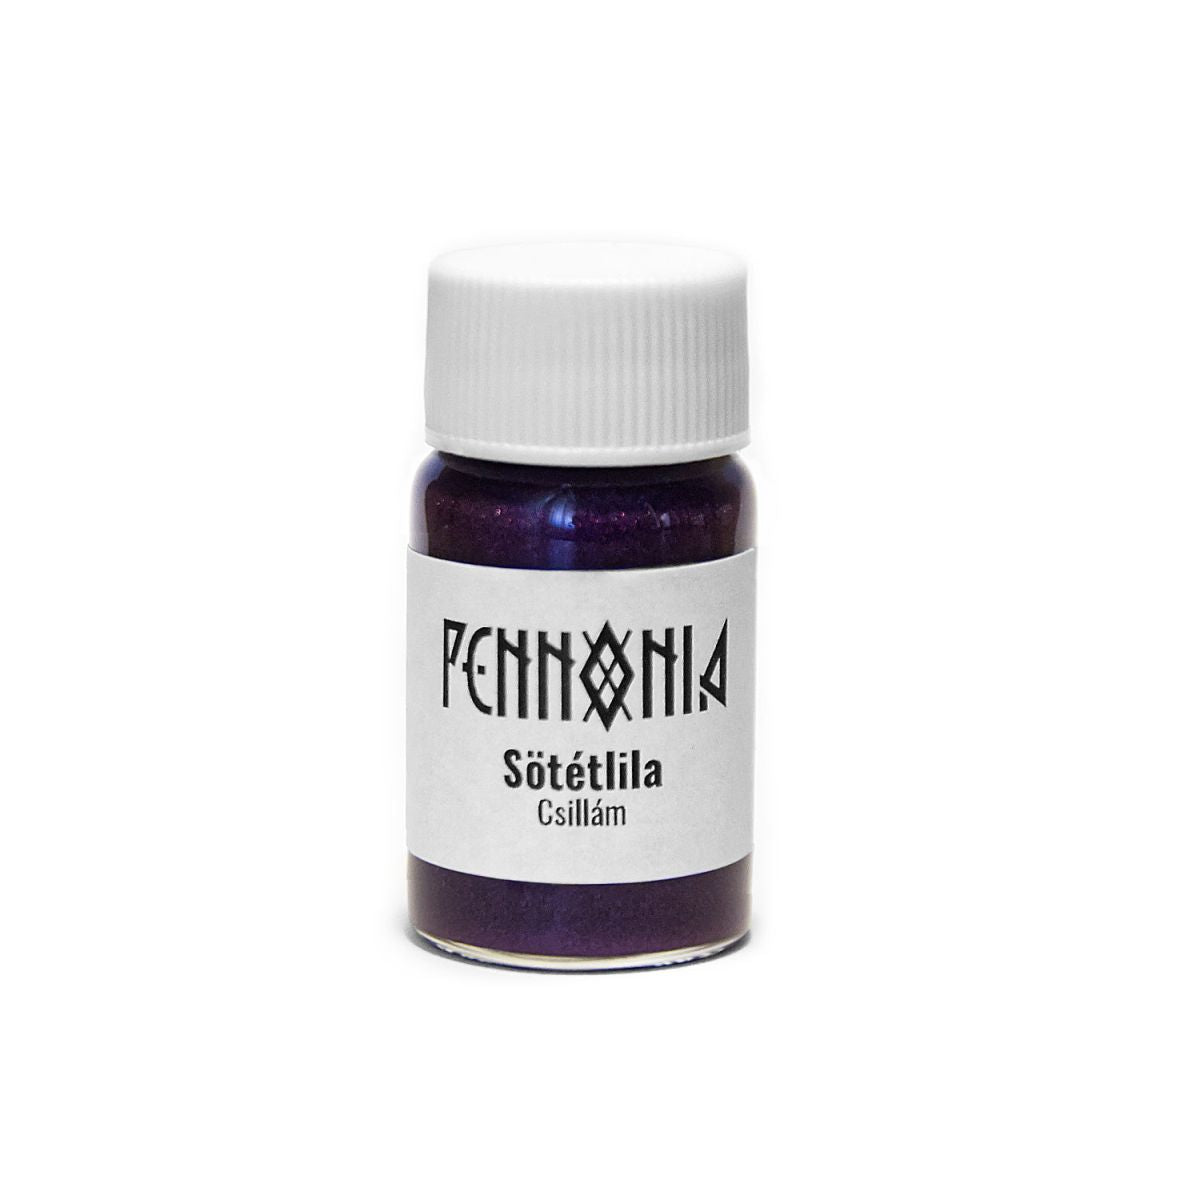 Pennonia shimmer additive - Sotelila